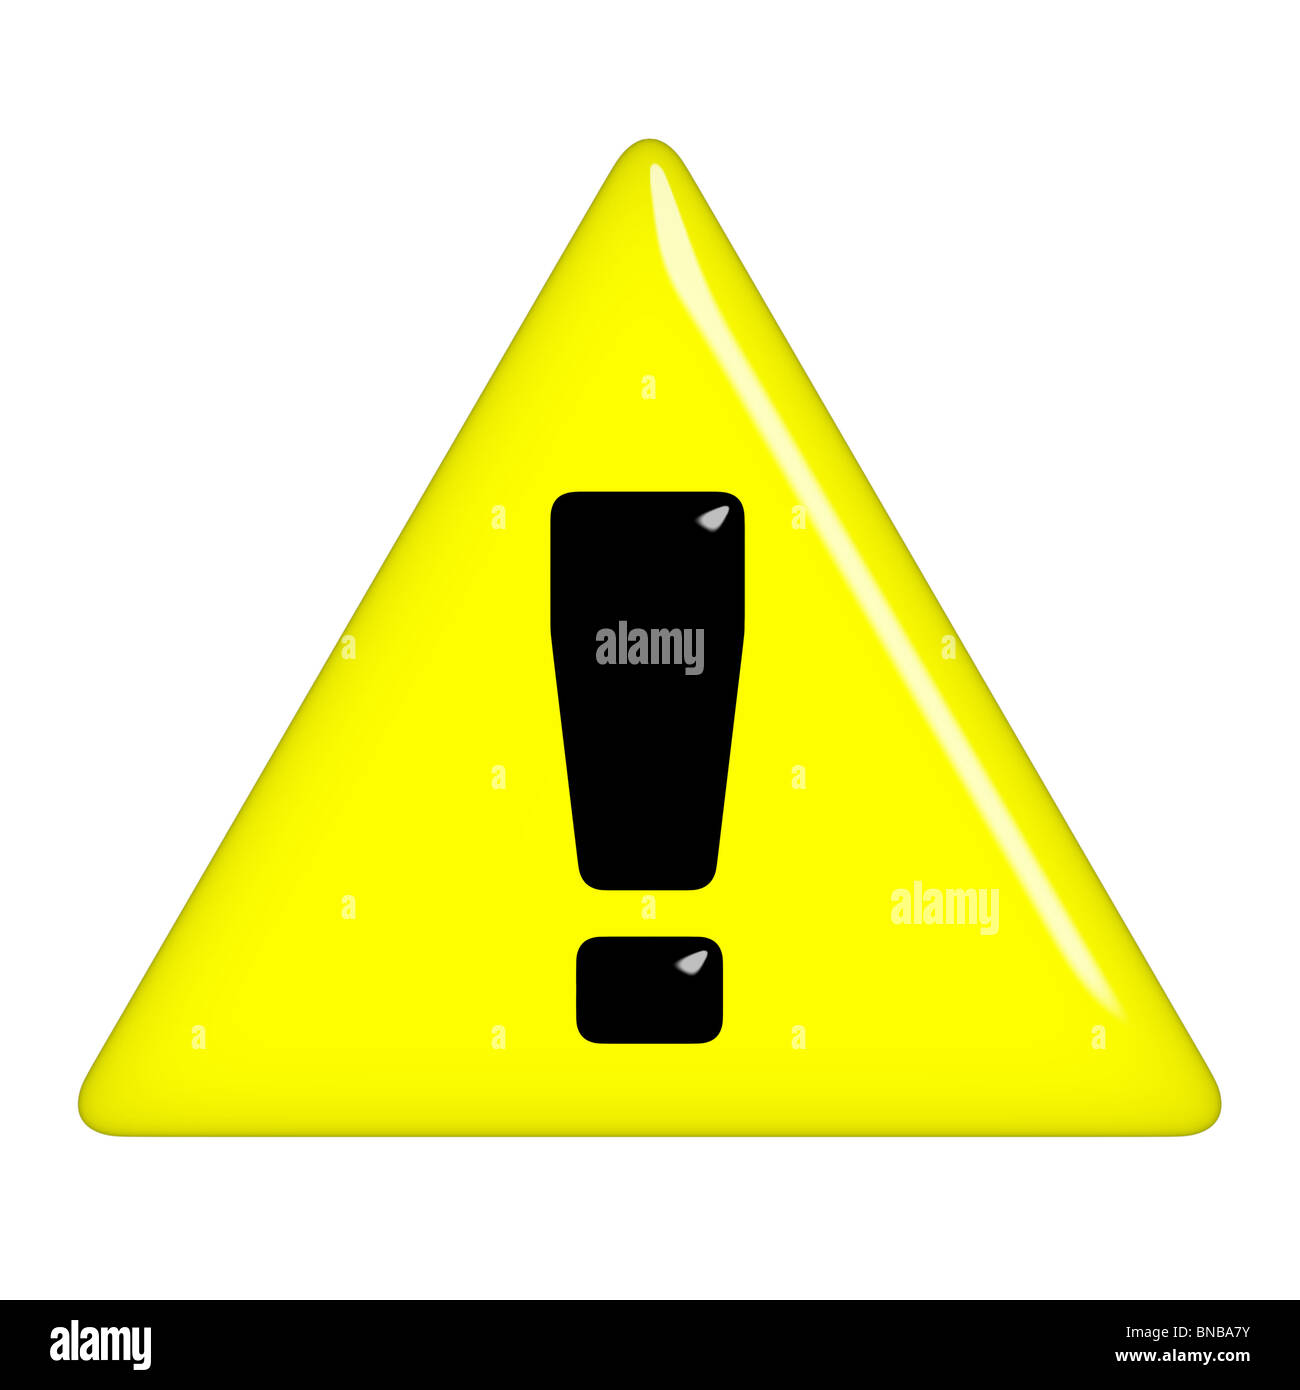 3d warning sign Stock Photo - Alamy